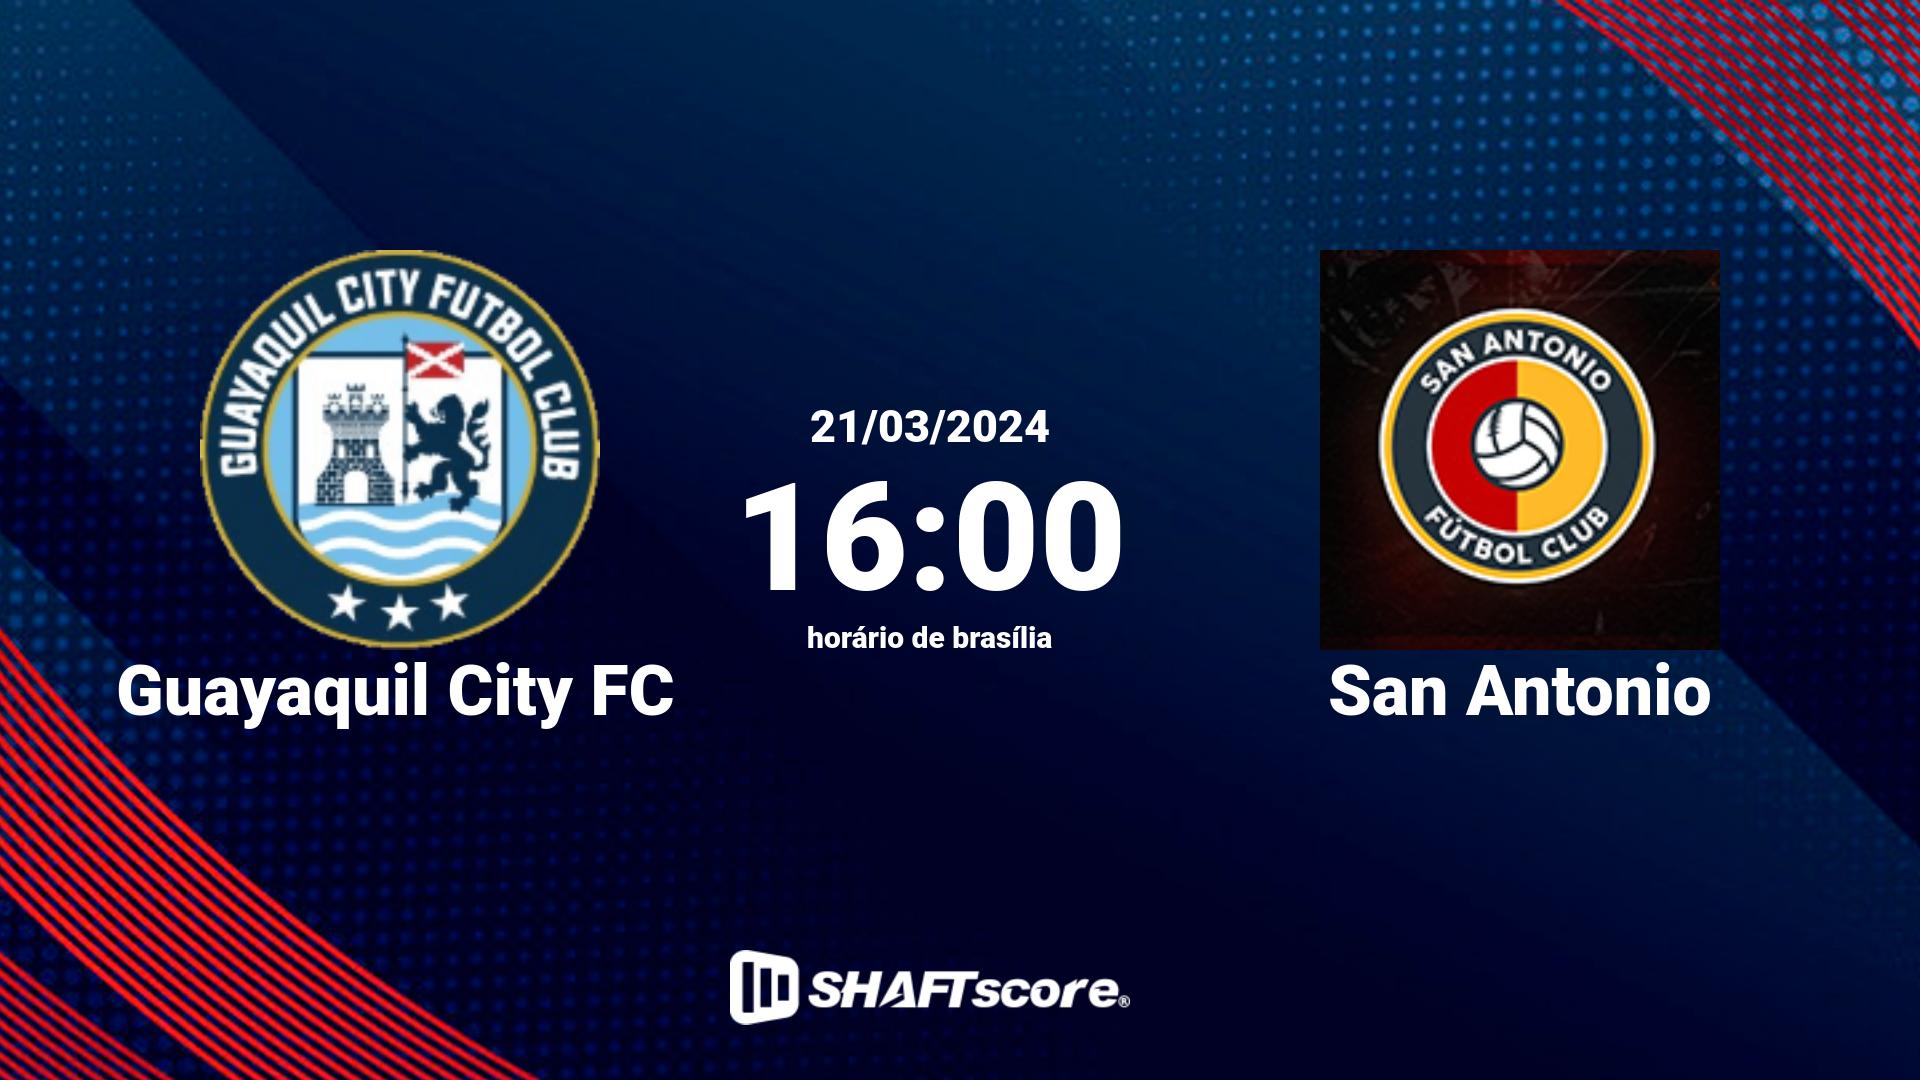 Estatísticas do jogo Guayaquil City FC vs San Antonio 21.03 16:00